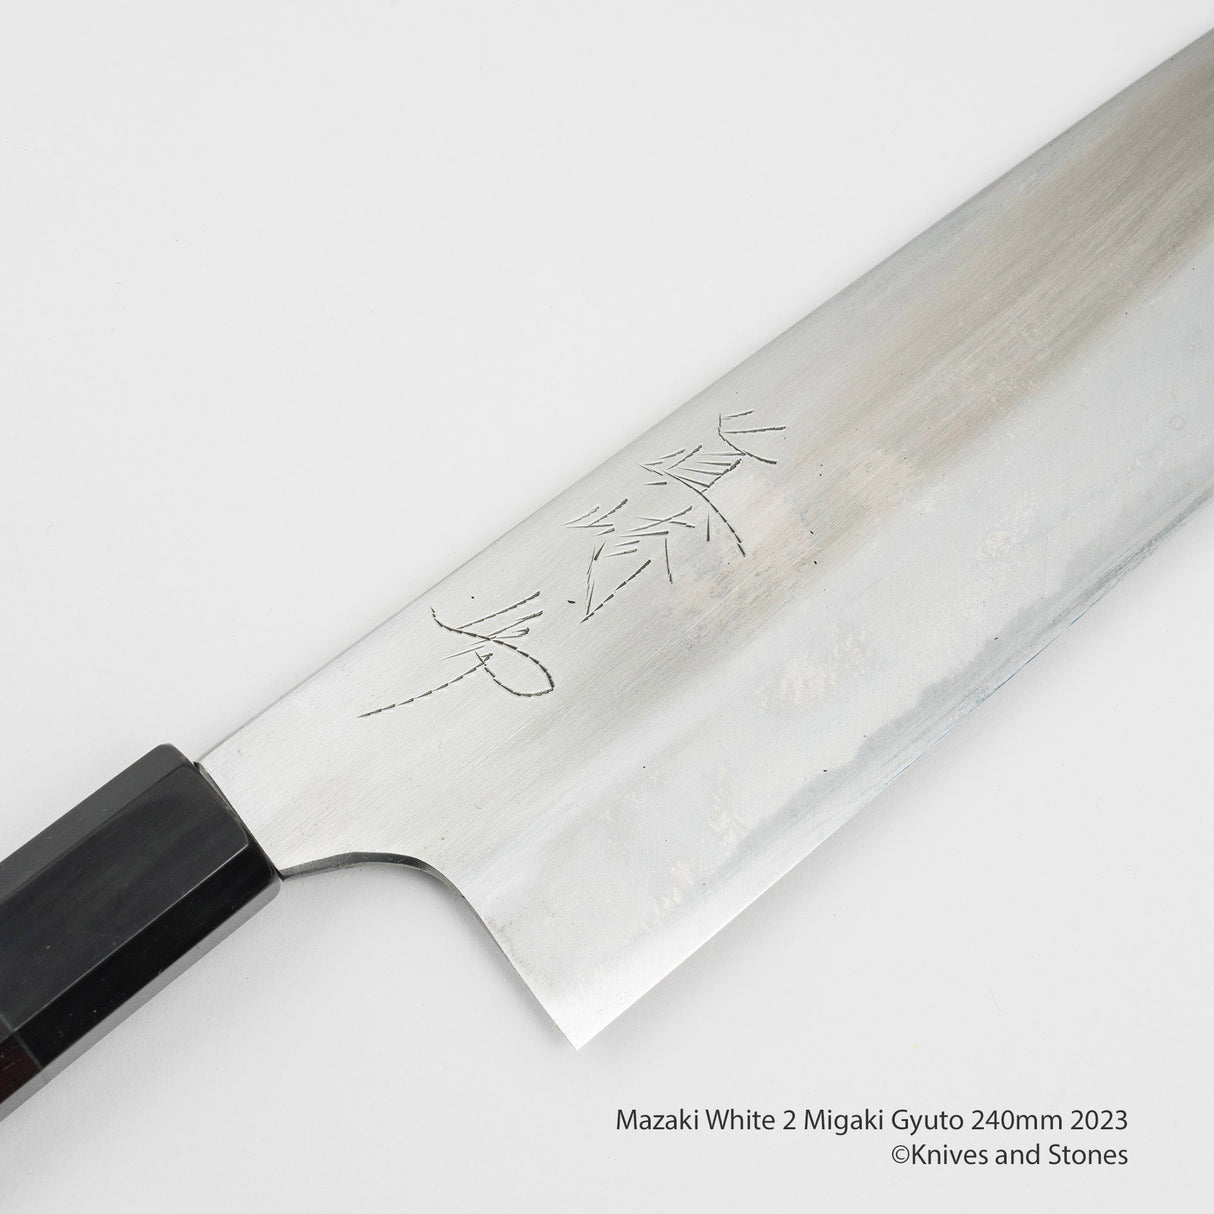 Mazaki White 2 Migaki Gyuto 240mm 2023 Version